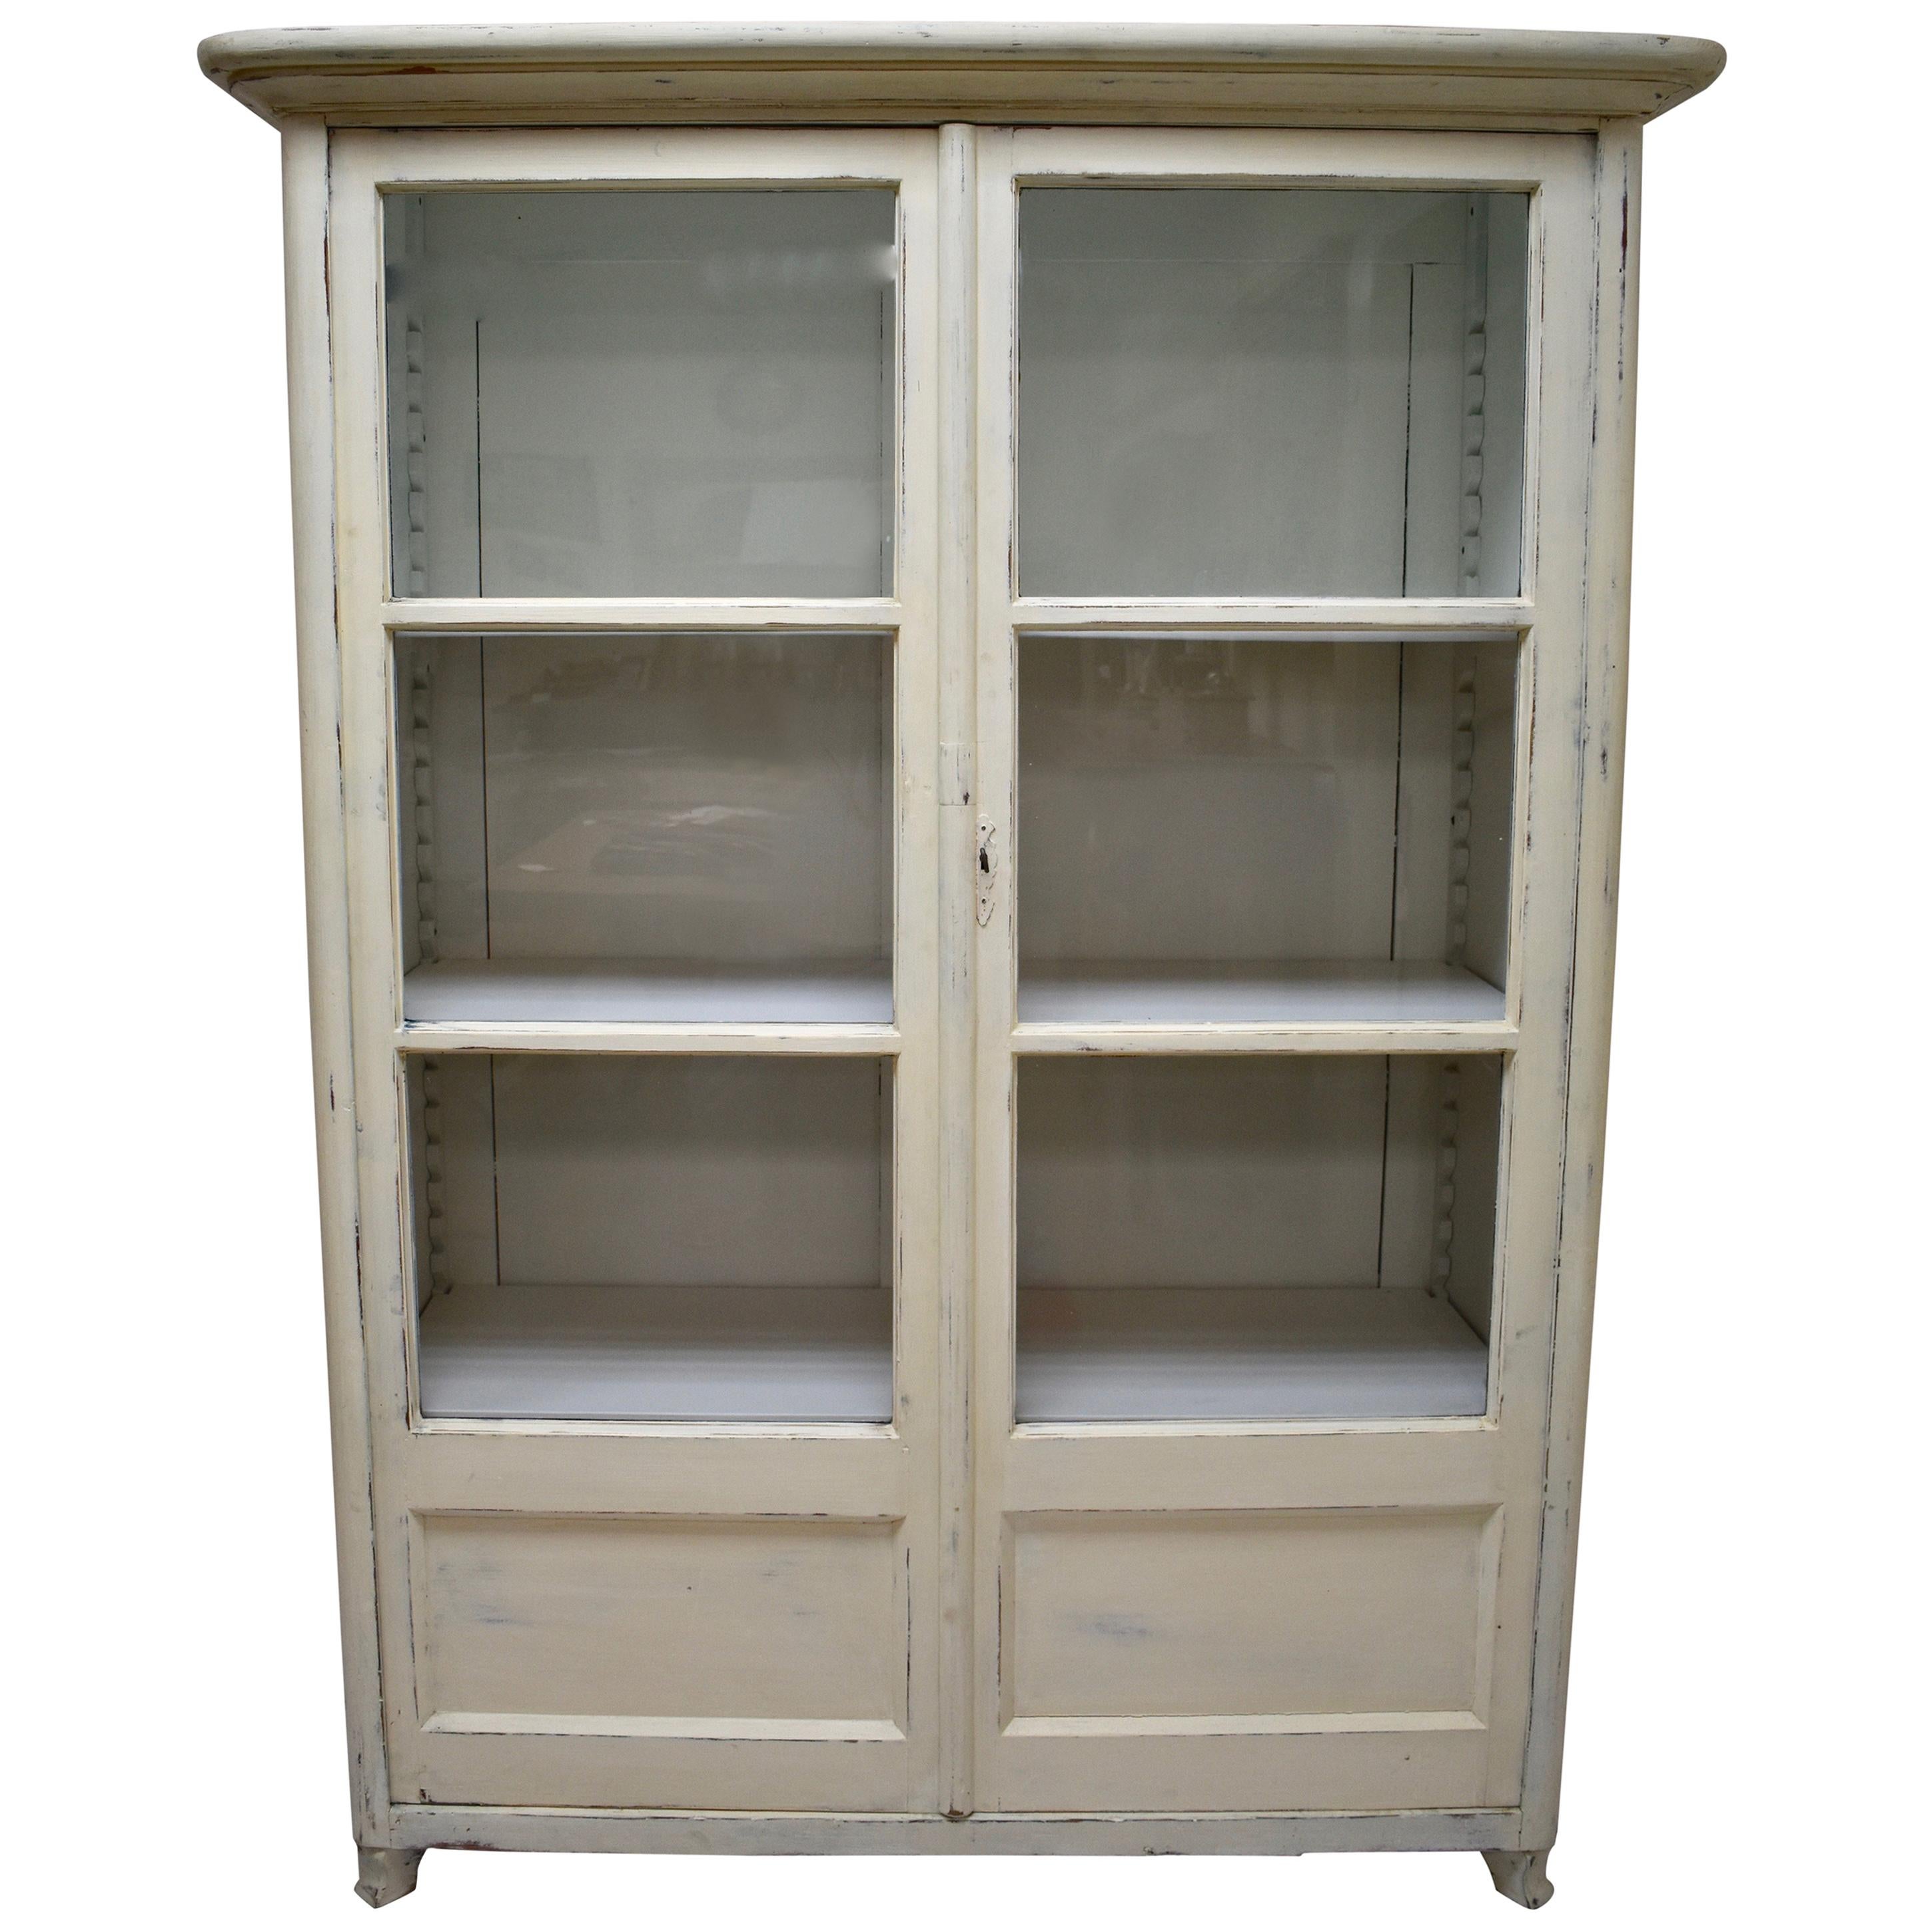 Painted Pine Glazed Cabinet or Vitrine